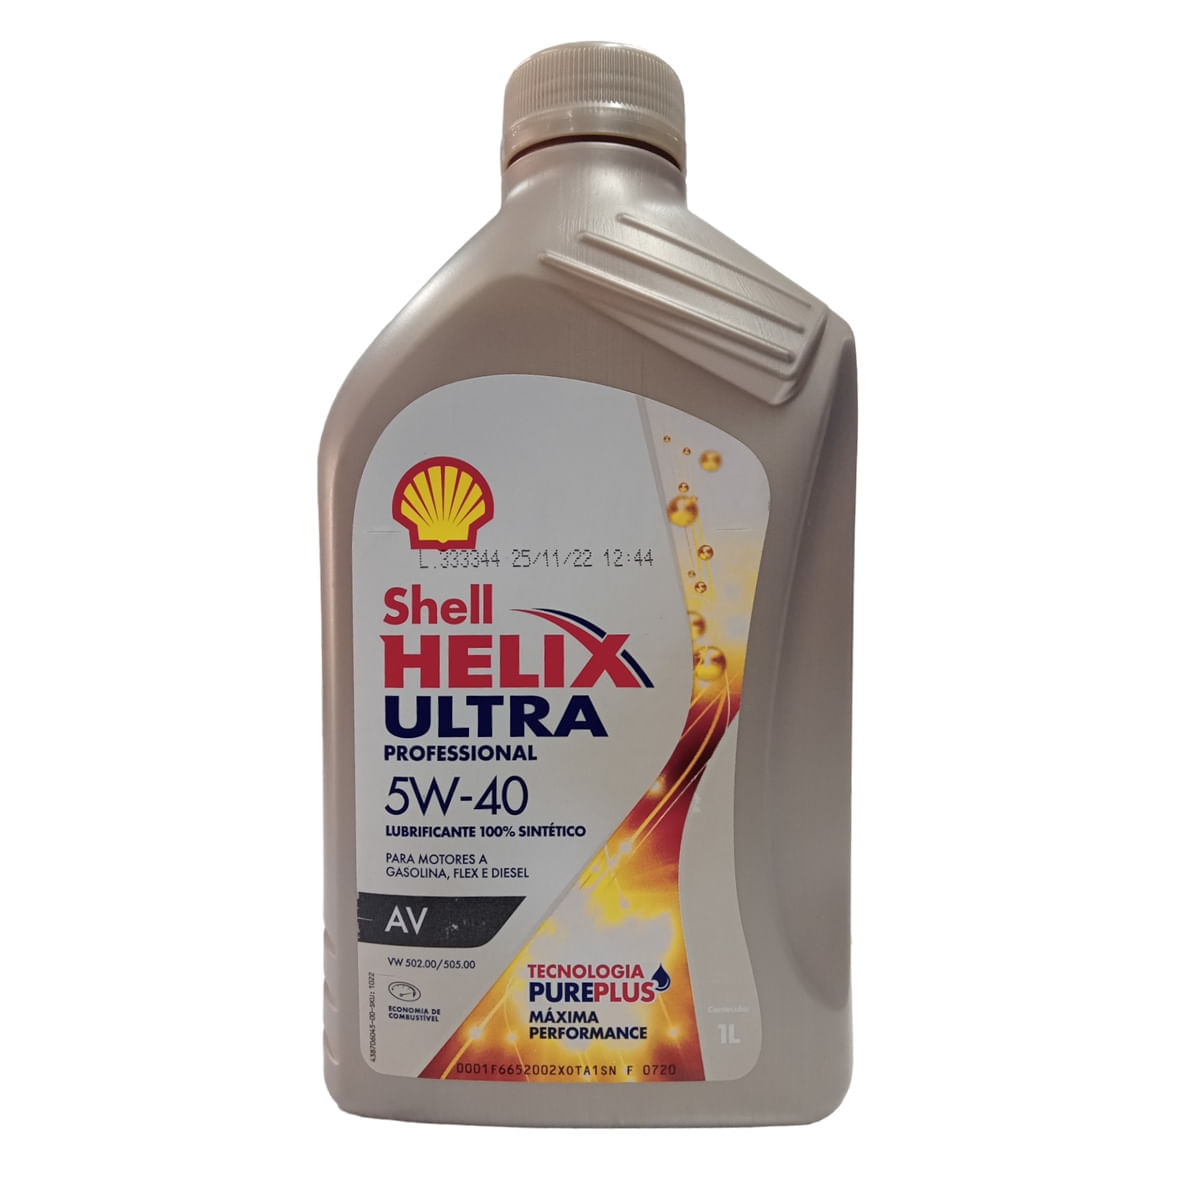 Óleo Lubrificante do Motor Shell Helix Ultra Professional AV 5W40 p/ Motores a Gasolina/Flex/Diesel 1L